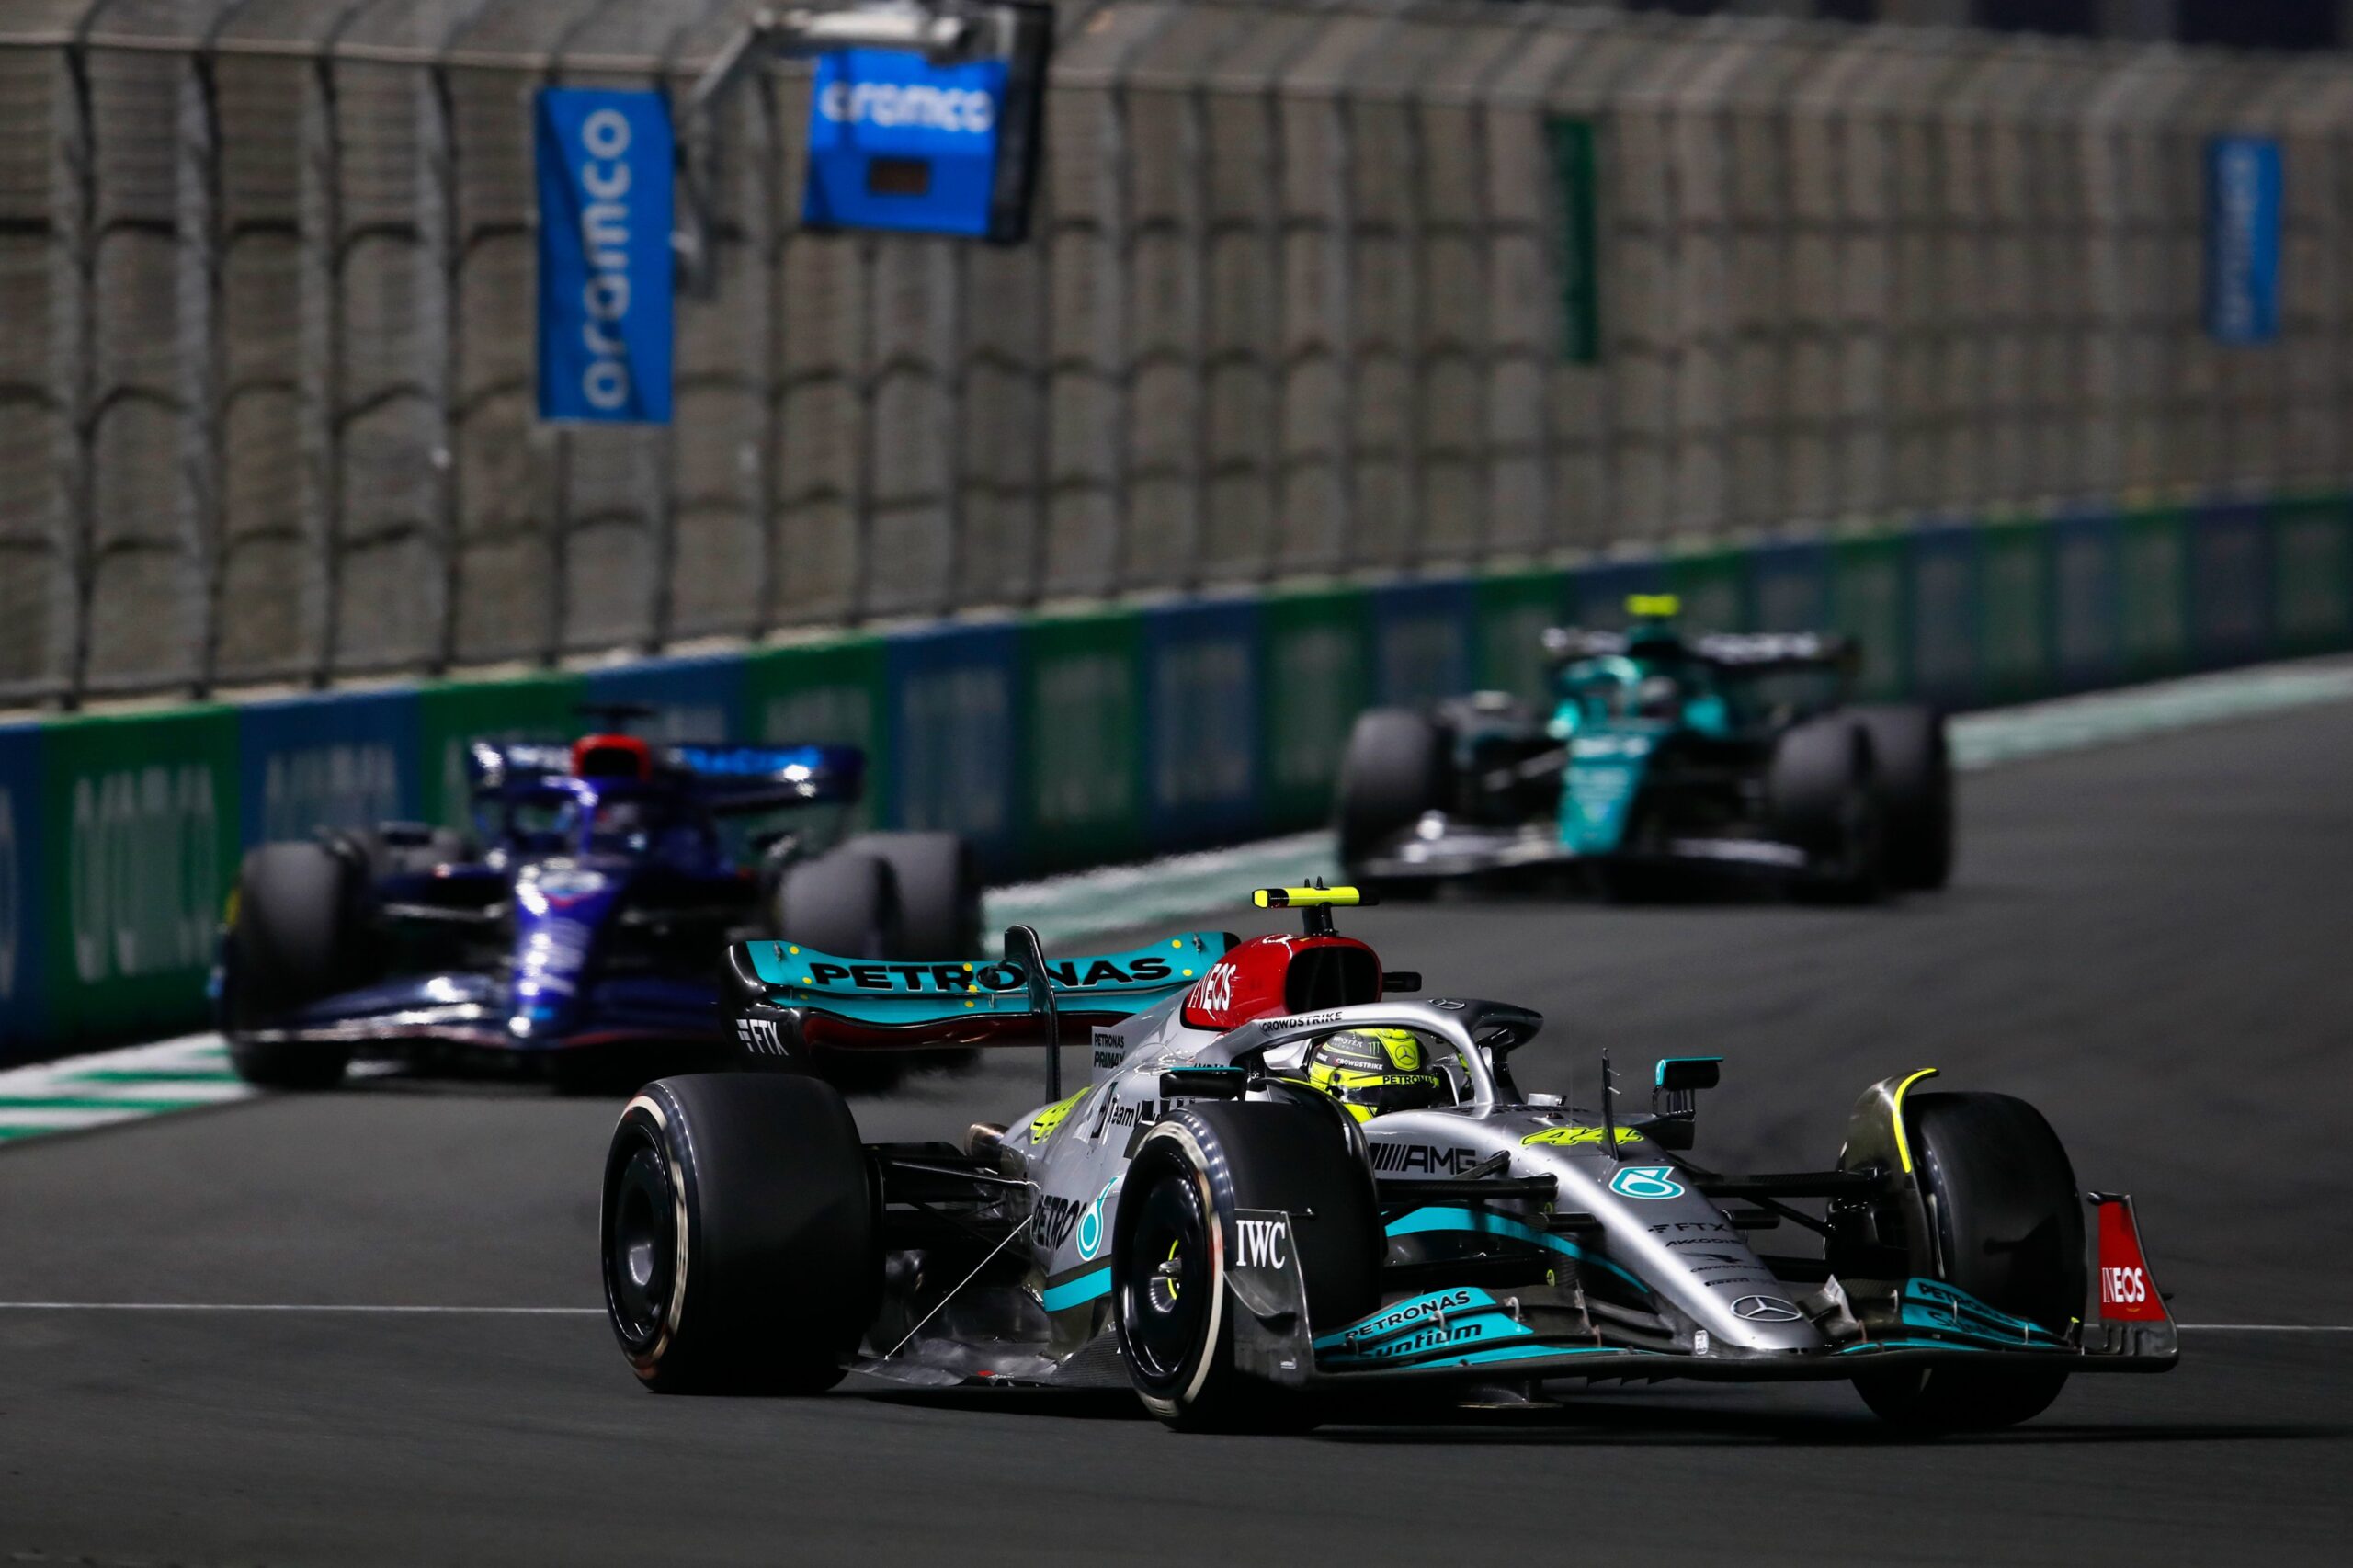 Lewis Hamilton struggled in the race